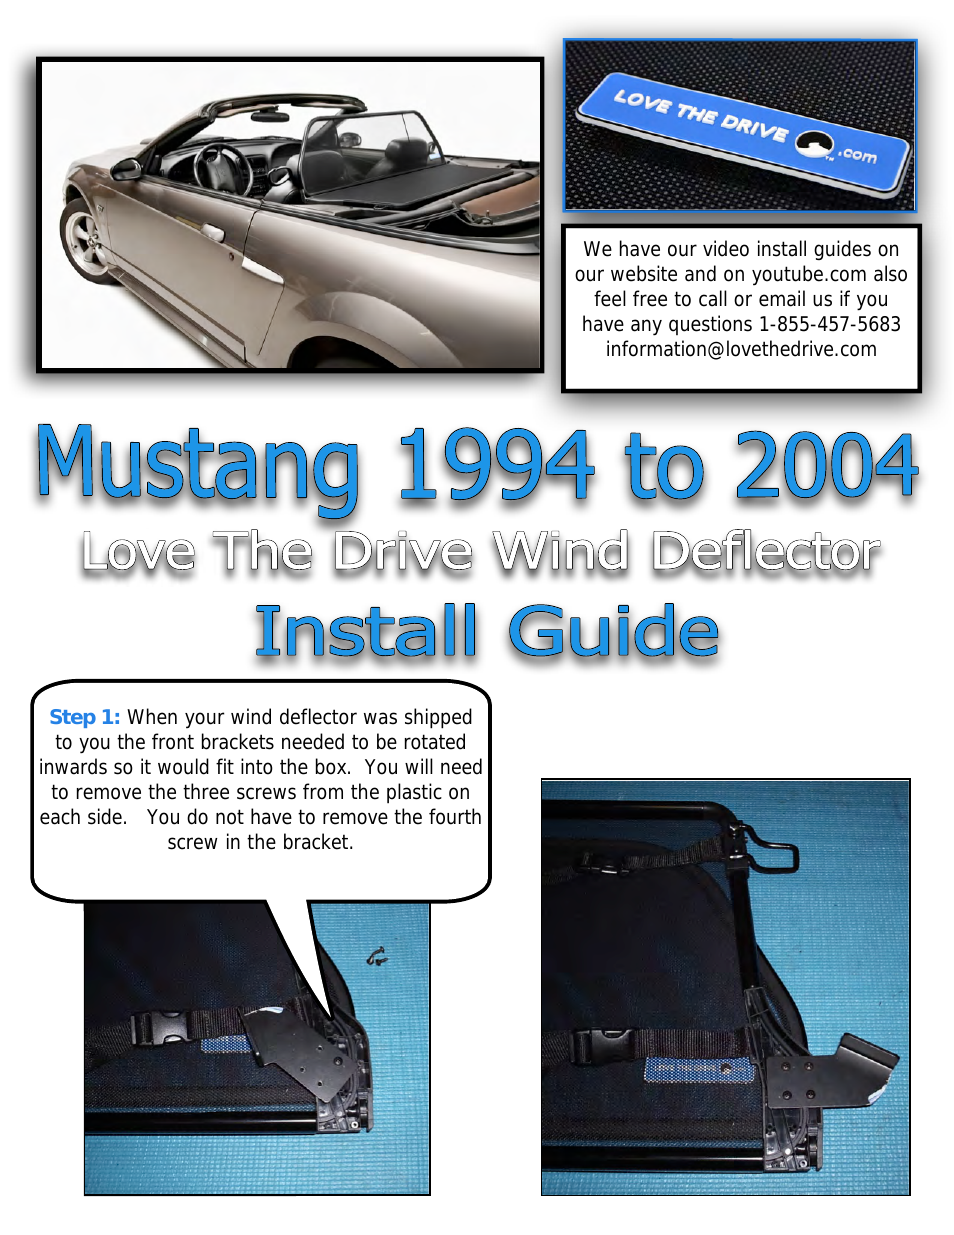 Mustang Wind Deflector 1994 to 2004